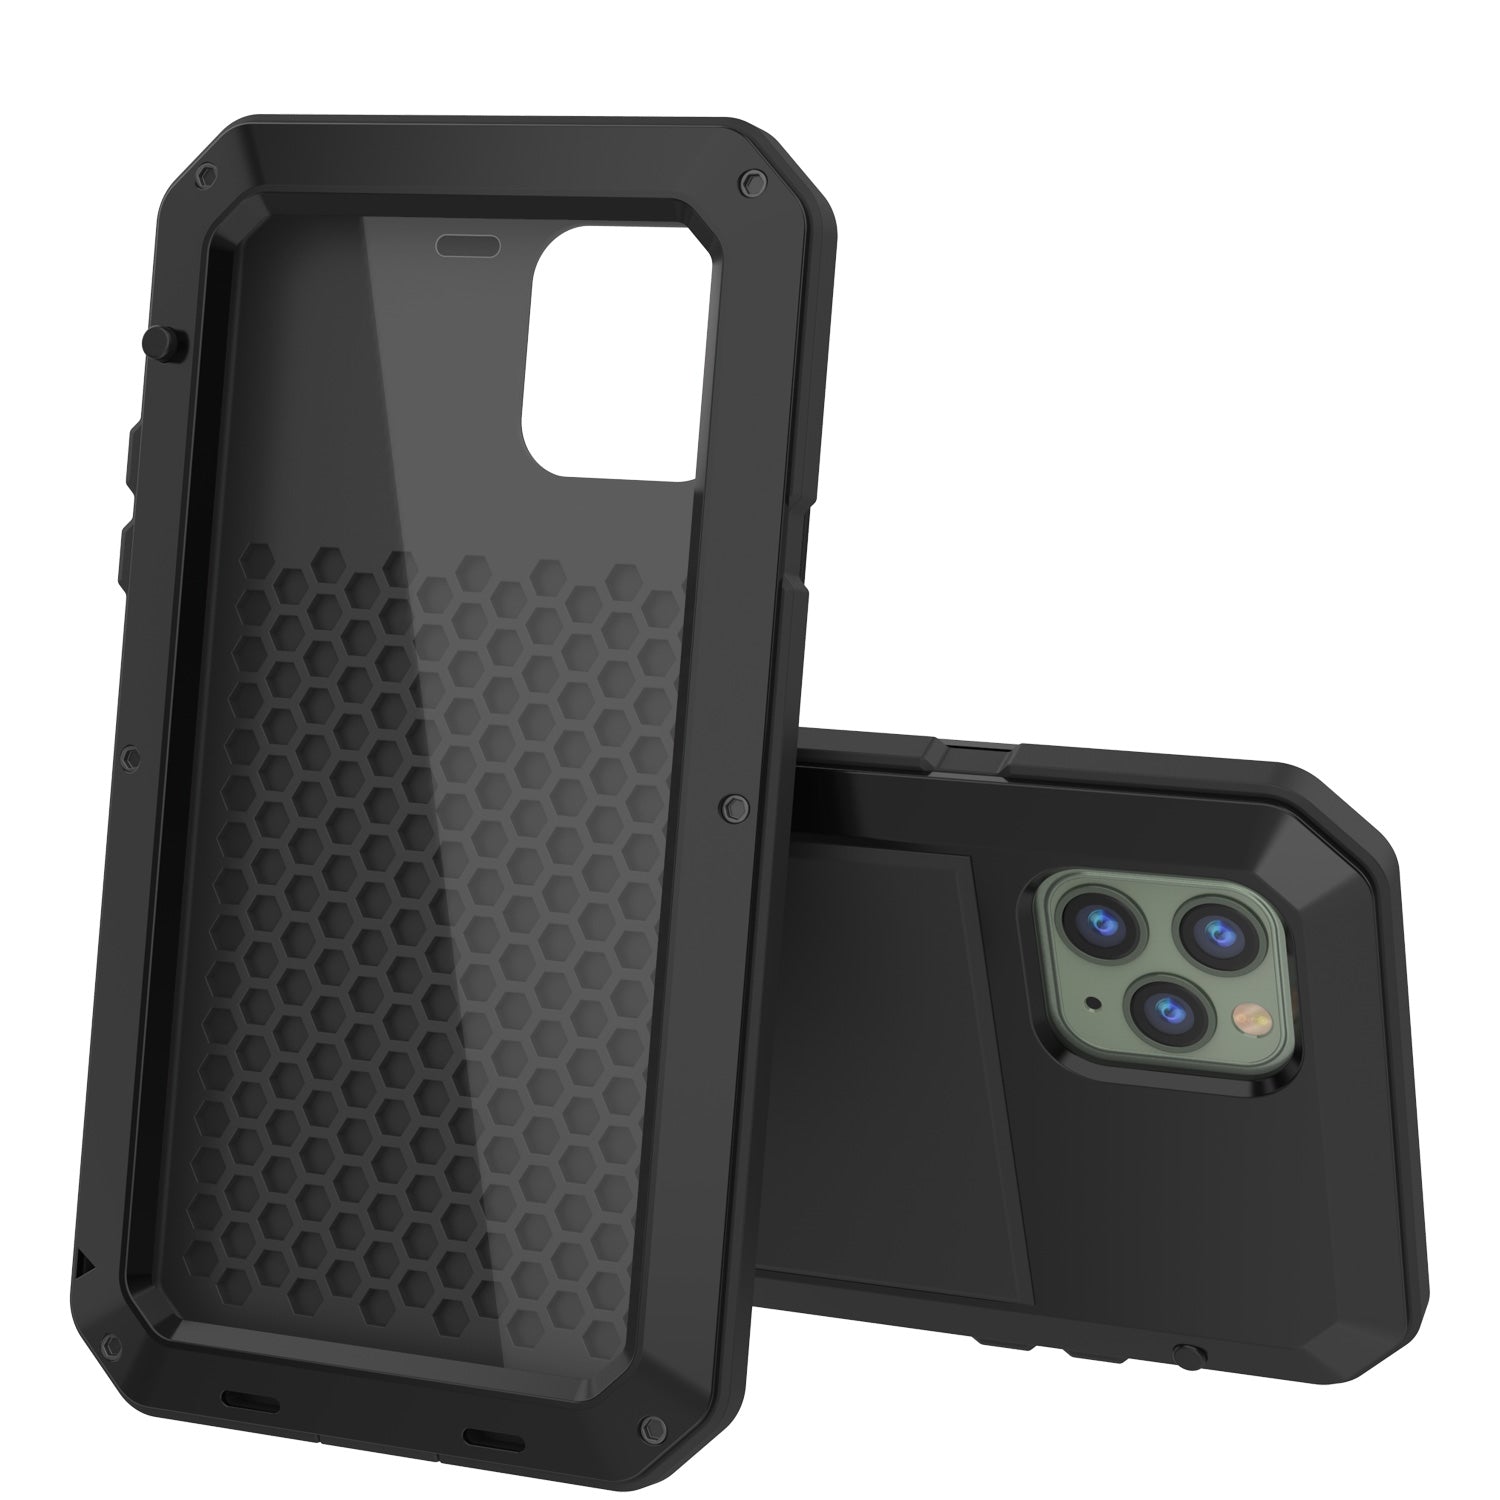 Olixar Titan Armour 360 iPhone 11 Pro Max Protective Case - Black